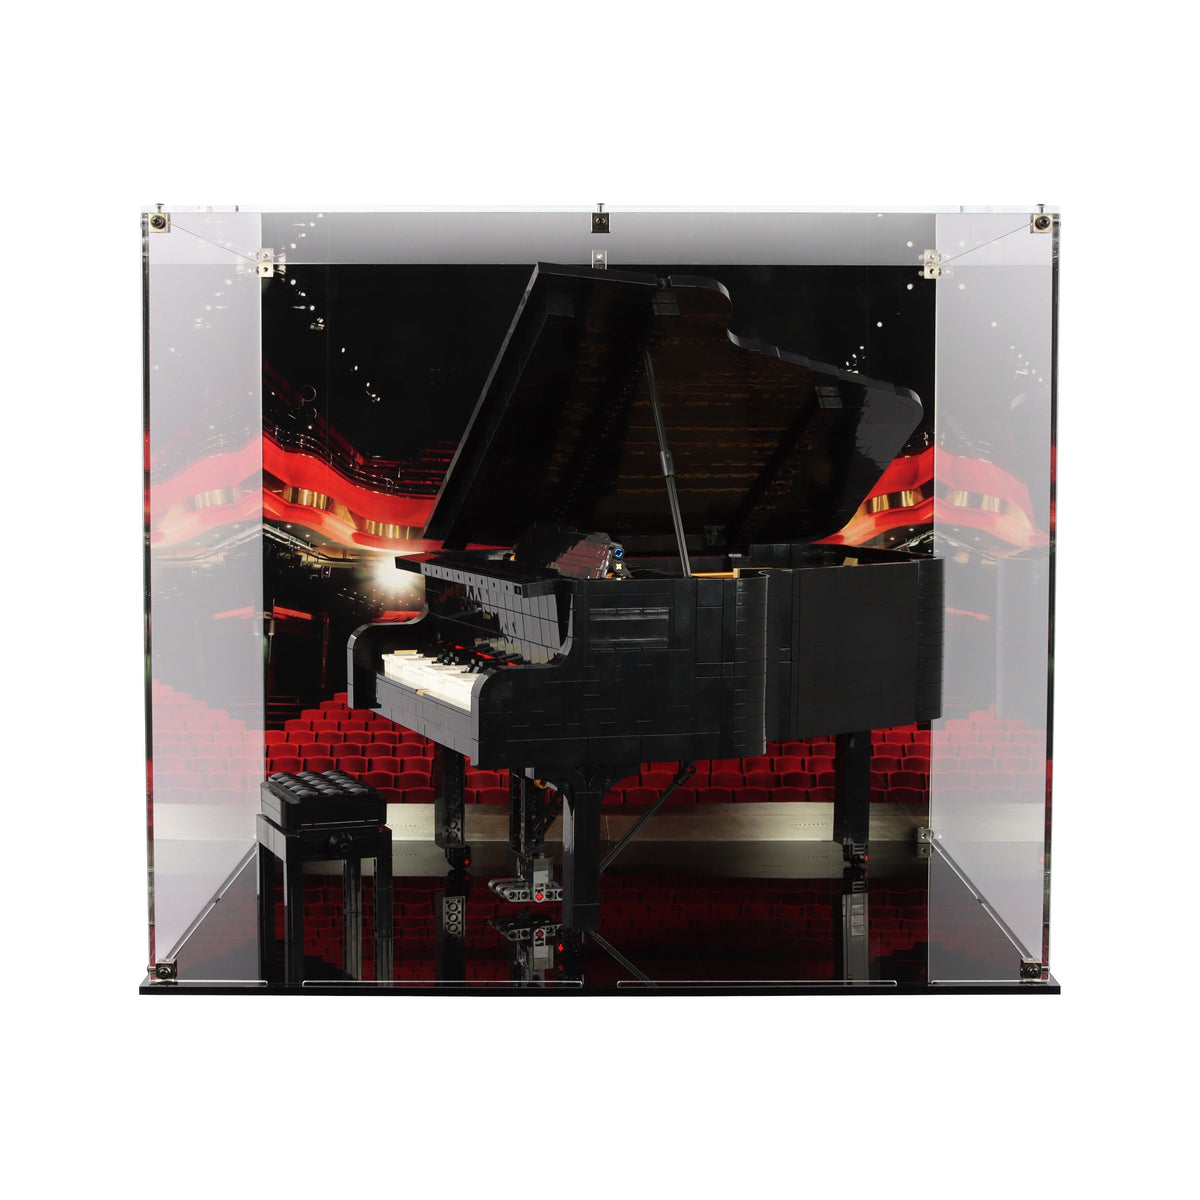 Lego 21323 Grand Piano Display Case